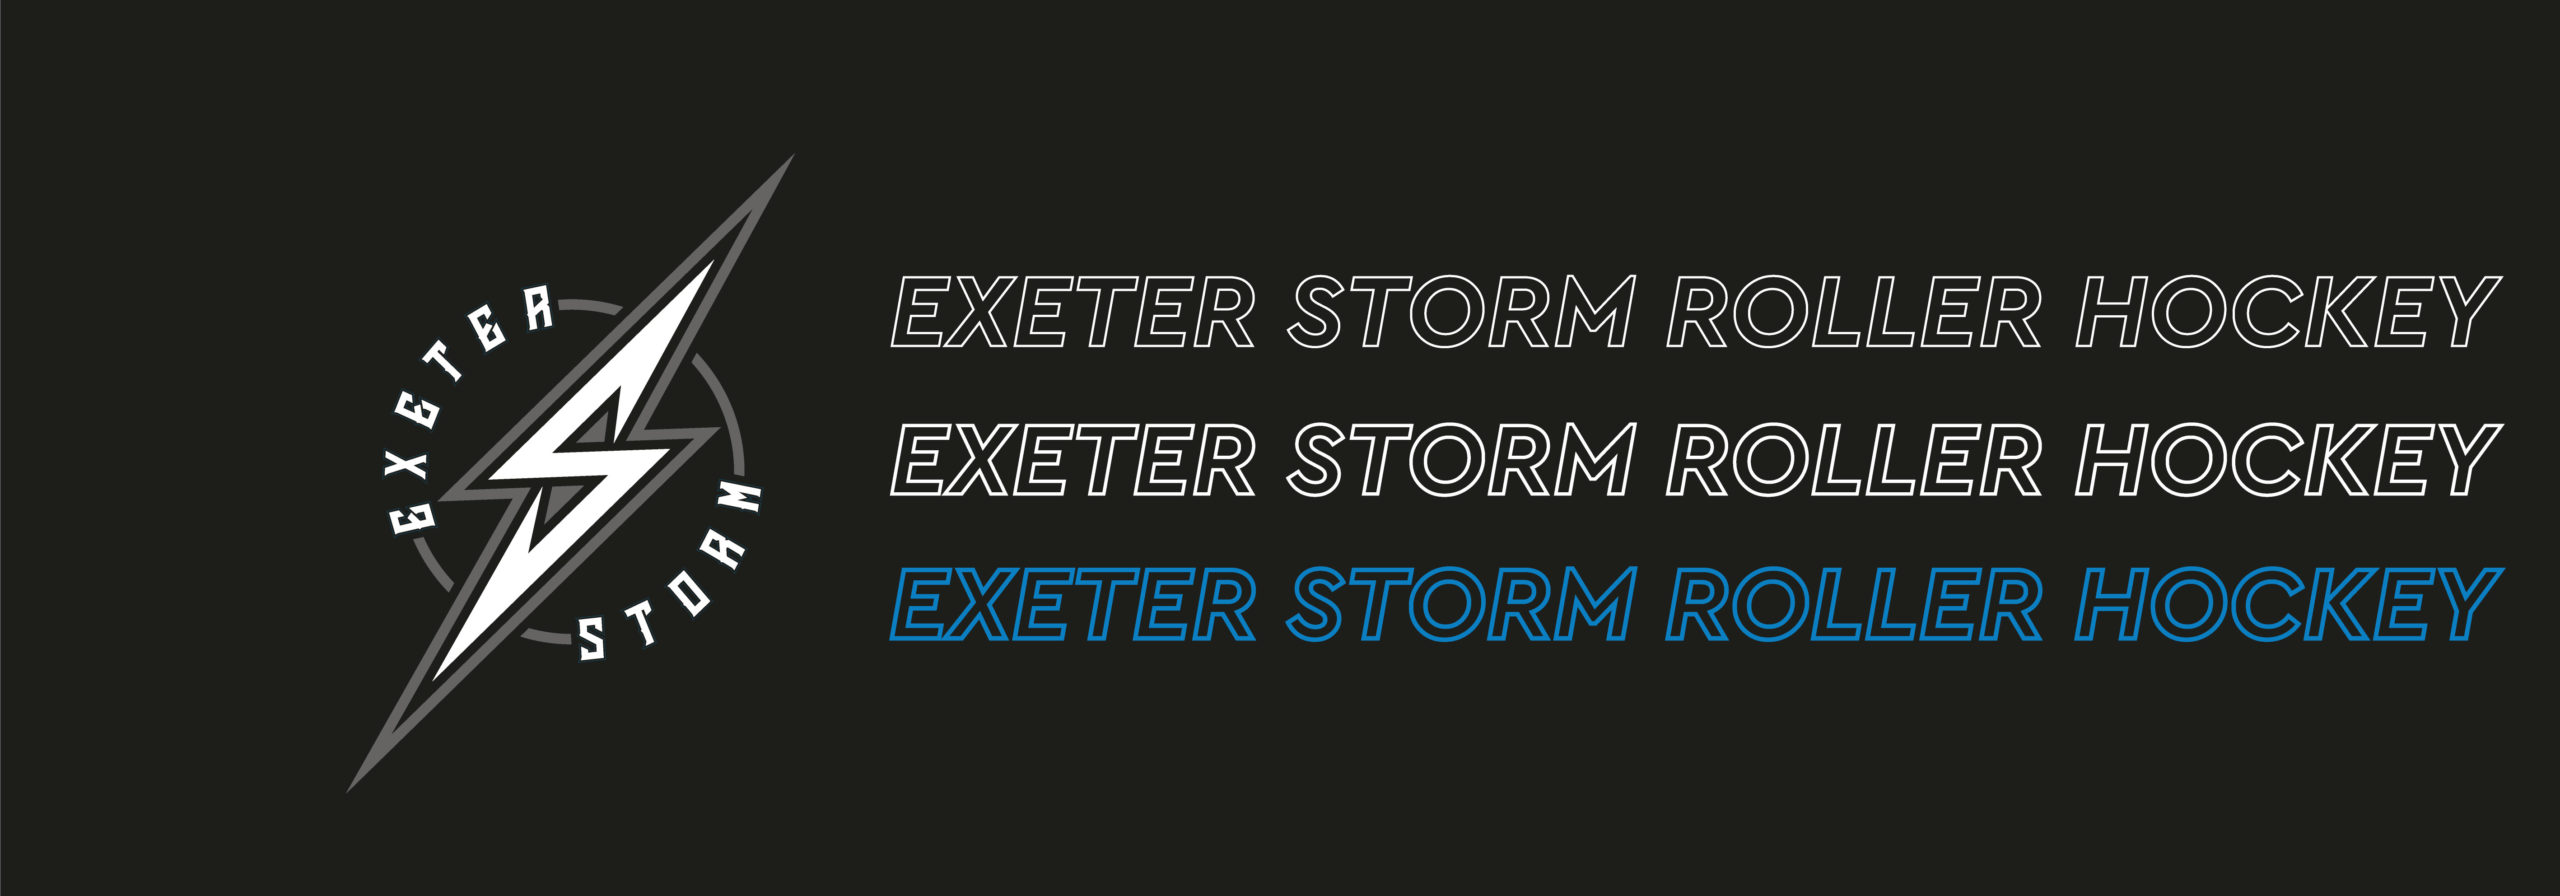 Exeter Storm Roller Hockey Team